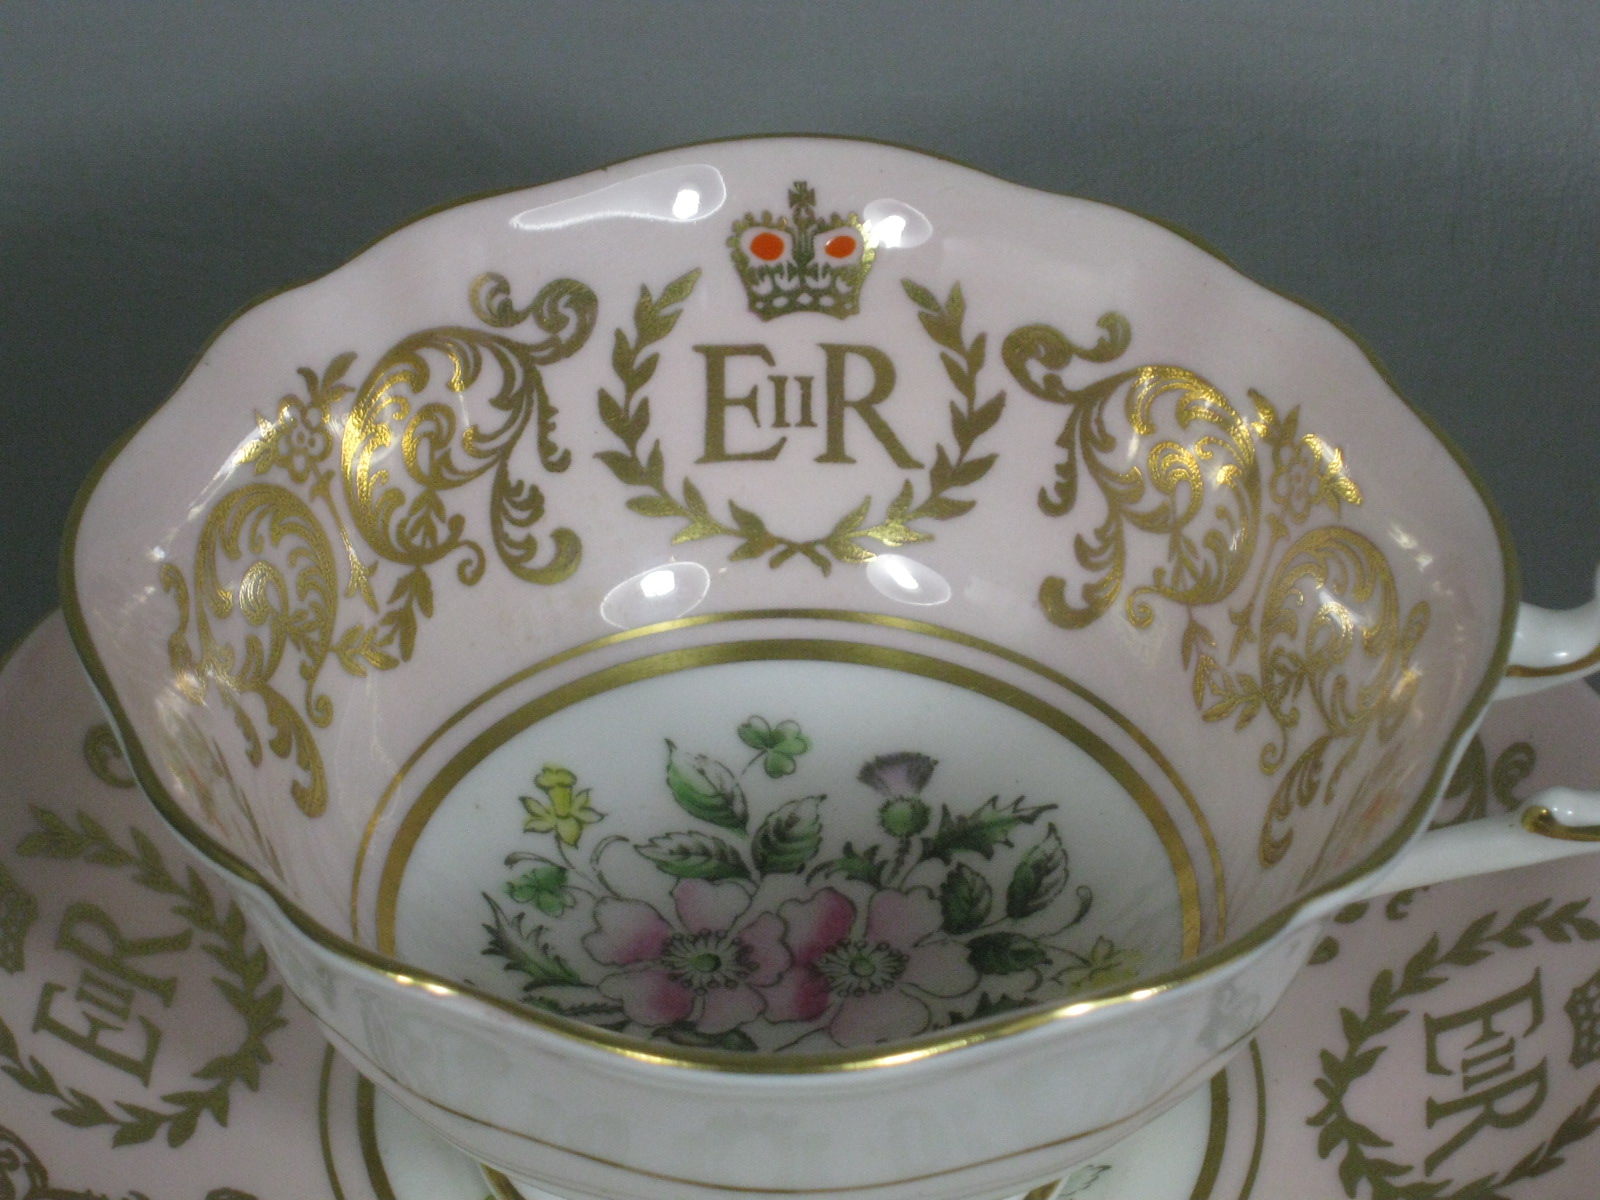 2 Paragon Bone China Queen Elizabeth II 1953 Coronation Tea Cups Teacups Saucers 3